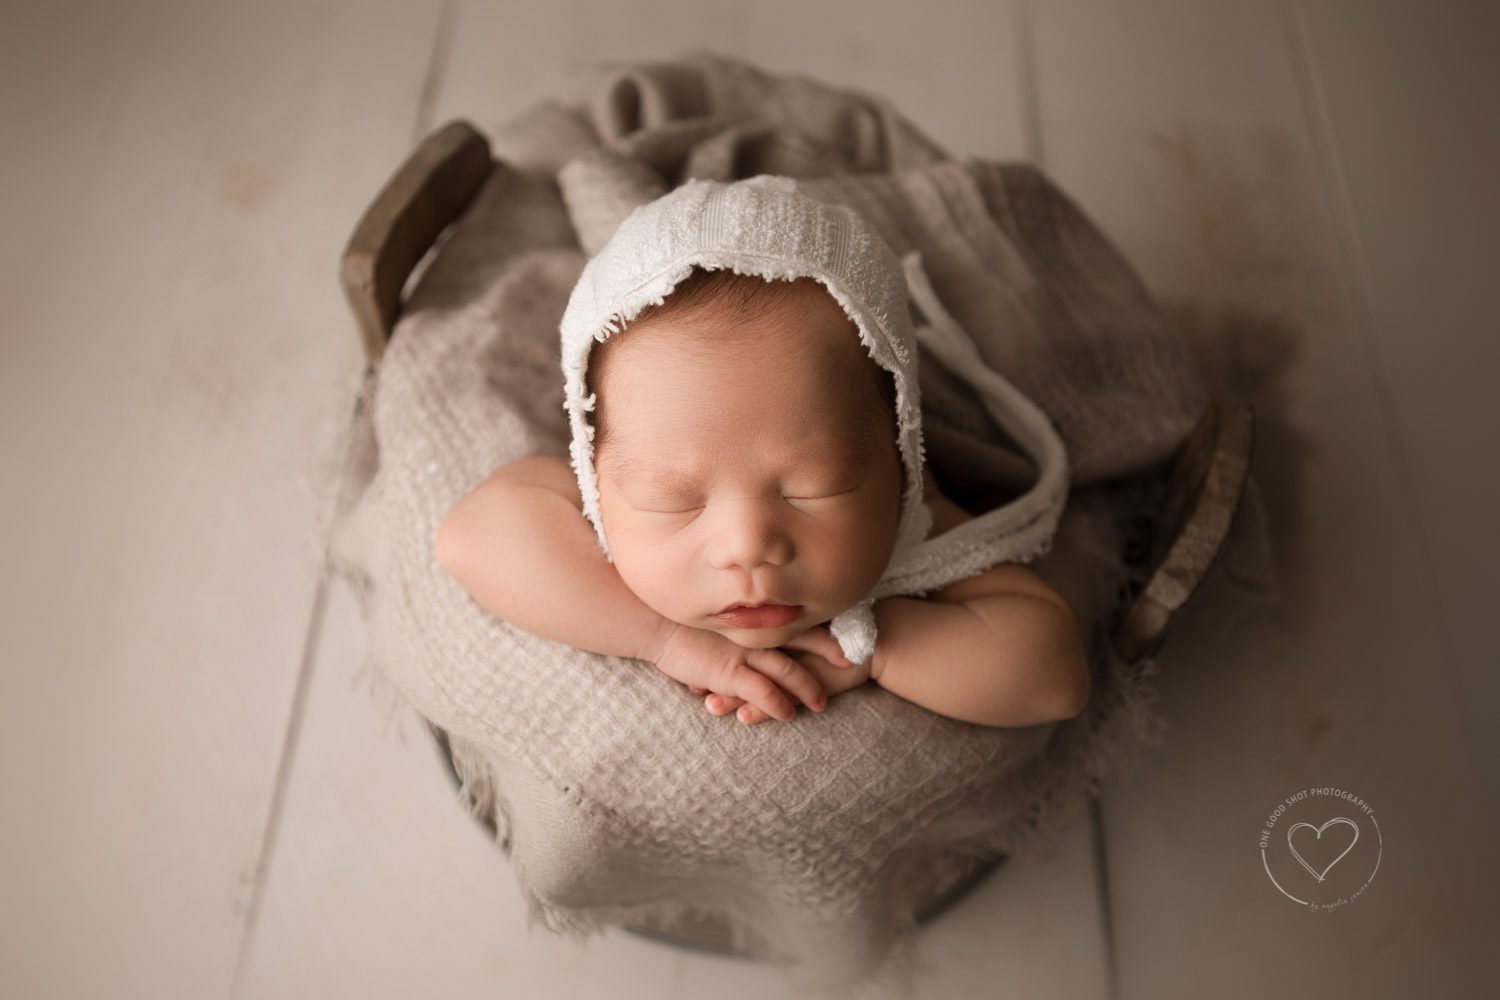 Newborn baby boy, Bucket pose, head on hands, wearing white bonnet, neutral colors, fresno photographer